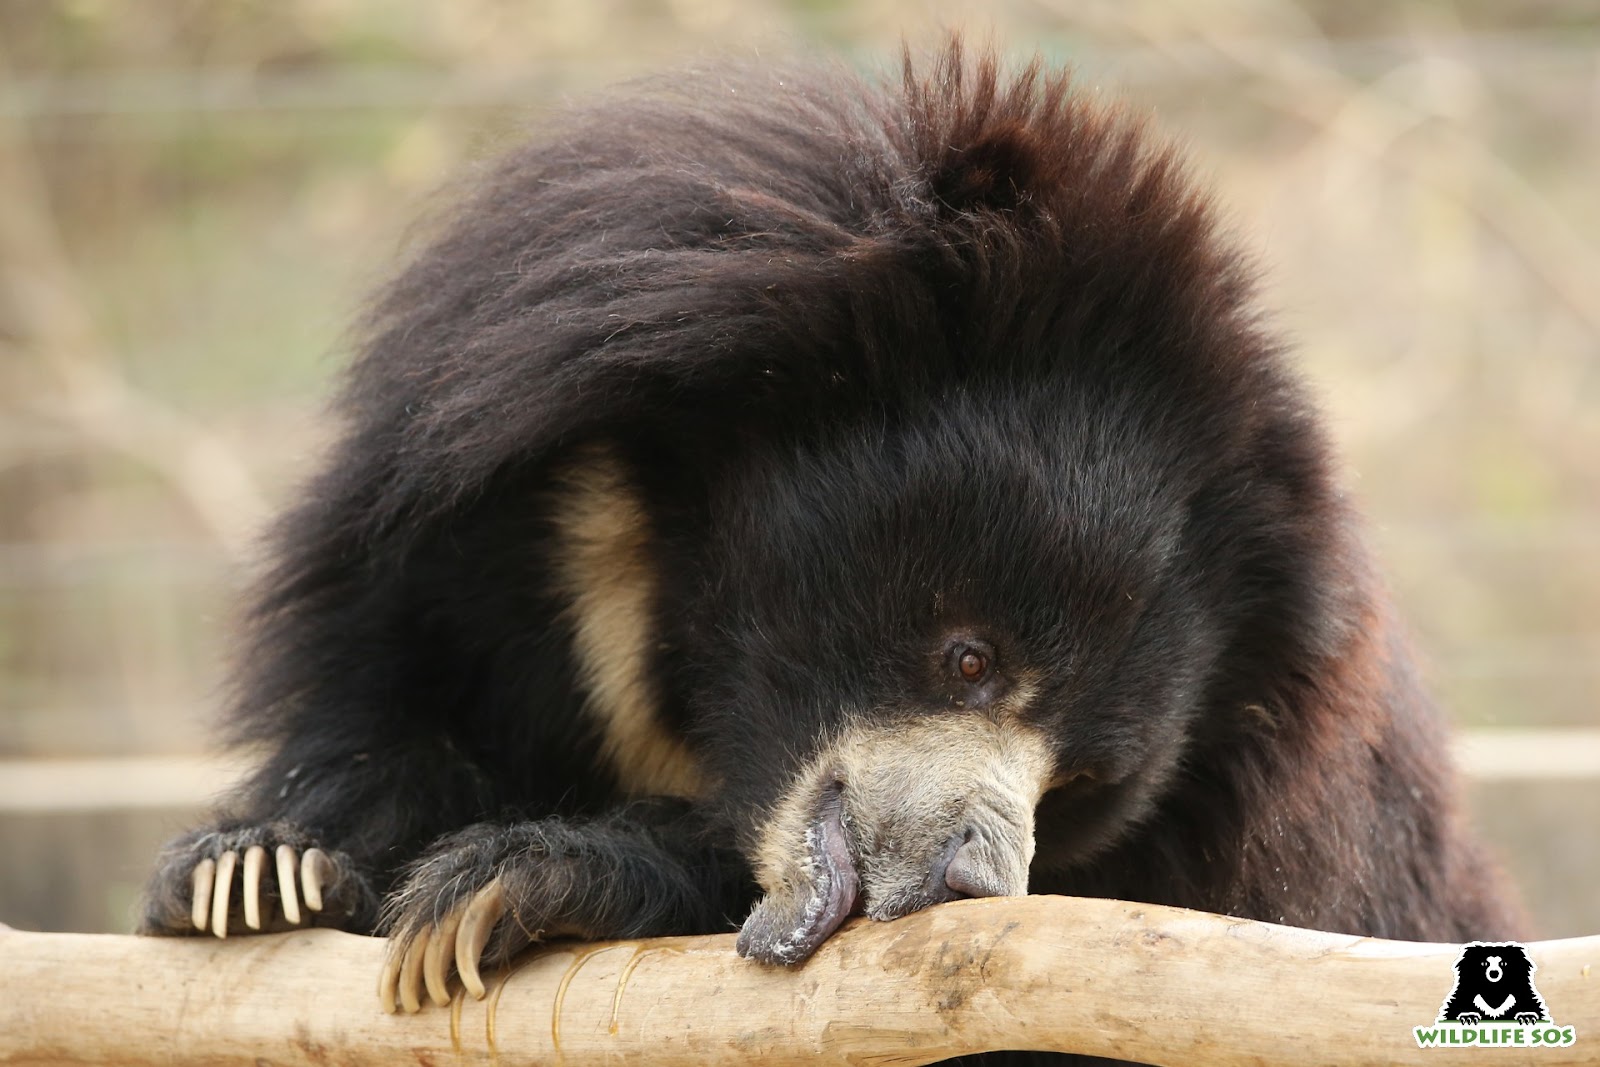 sloth bear is entomophagous